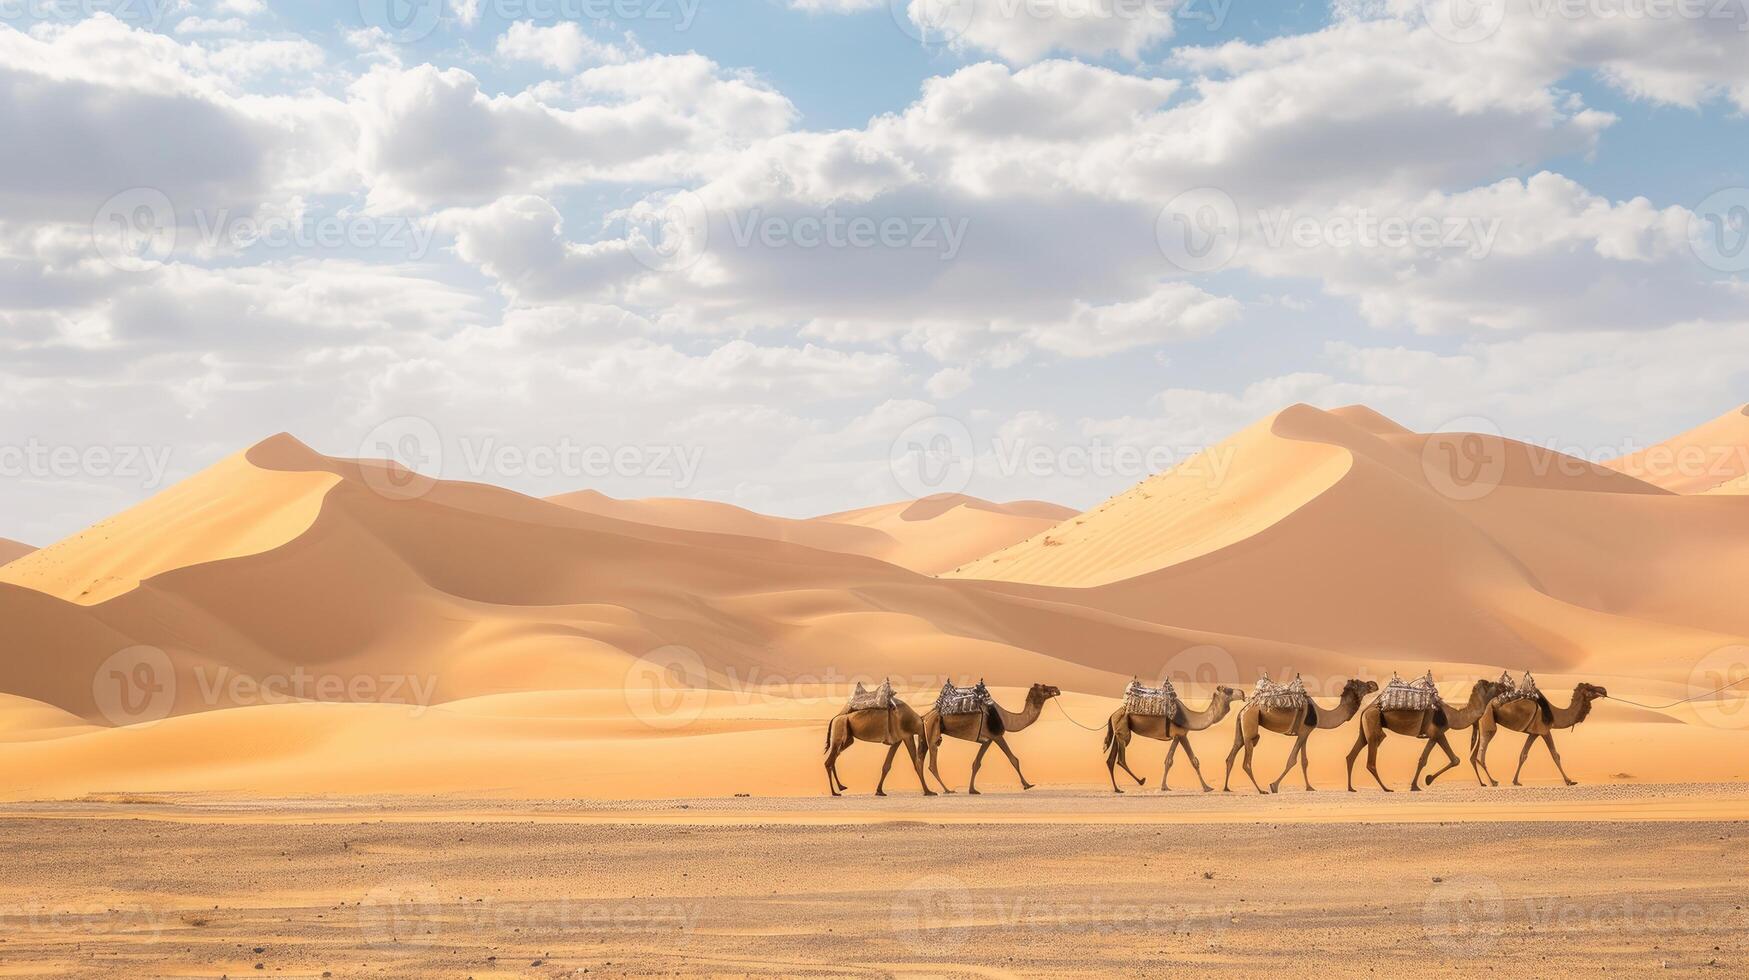 AI generated Camels in desert setting showcasing desert life photo